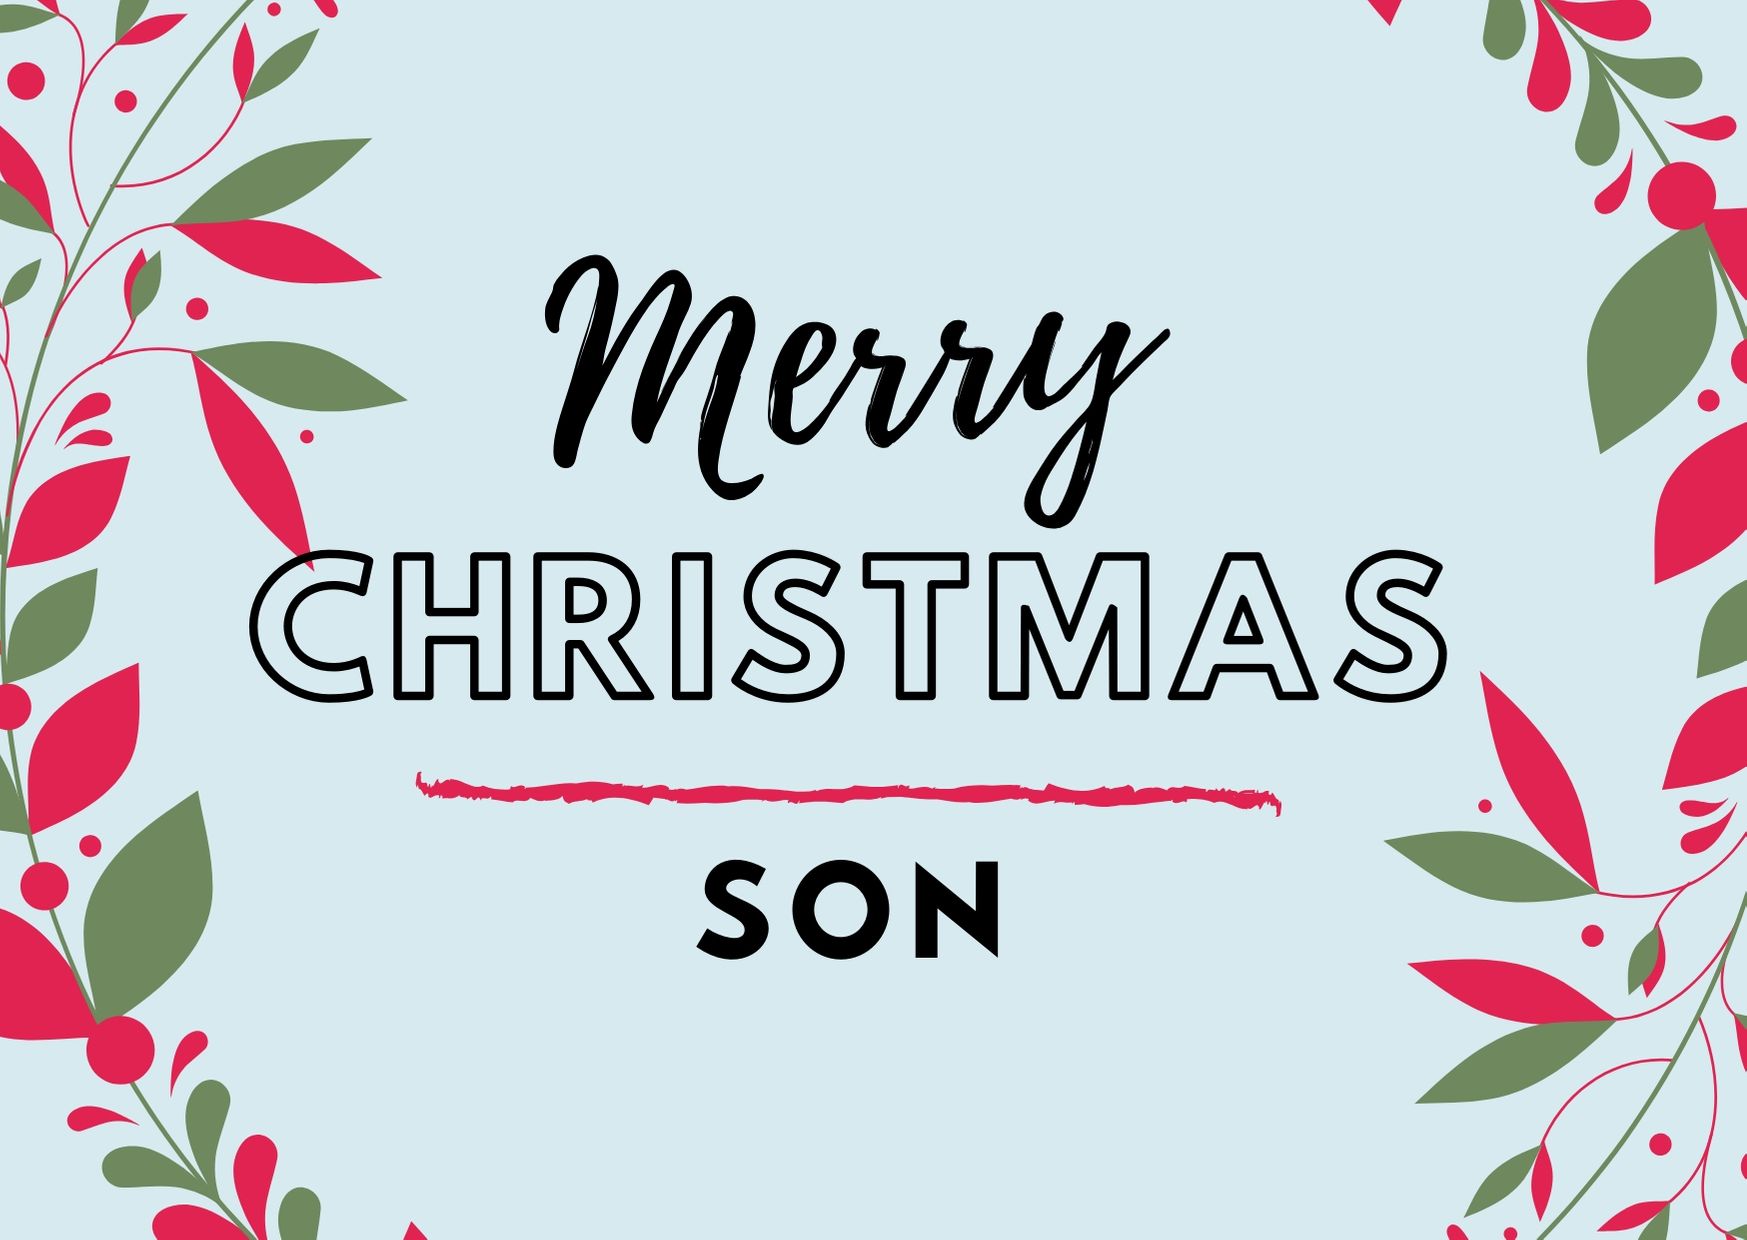 wishing you a Merry Christmas Son